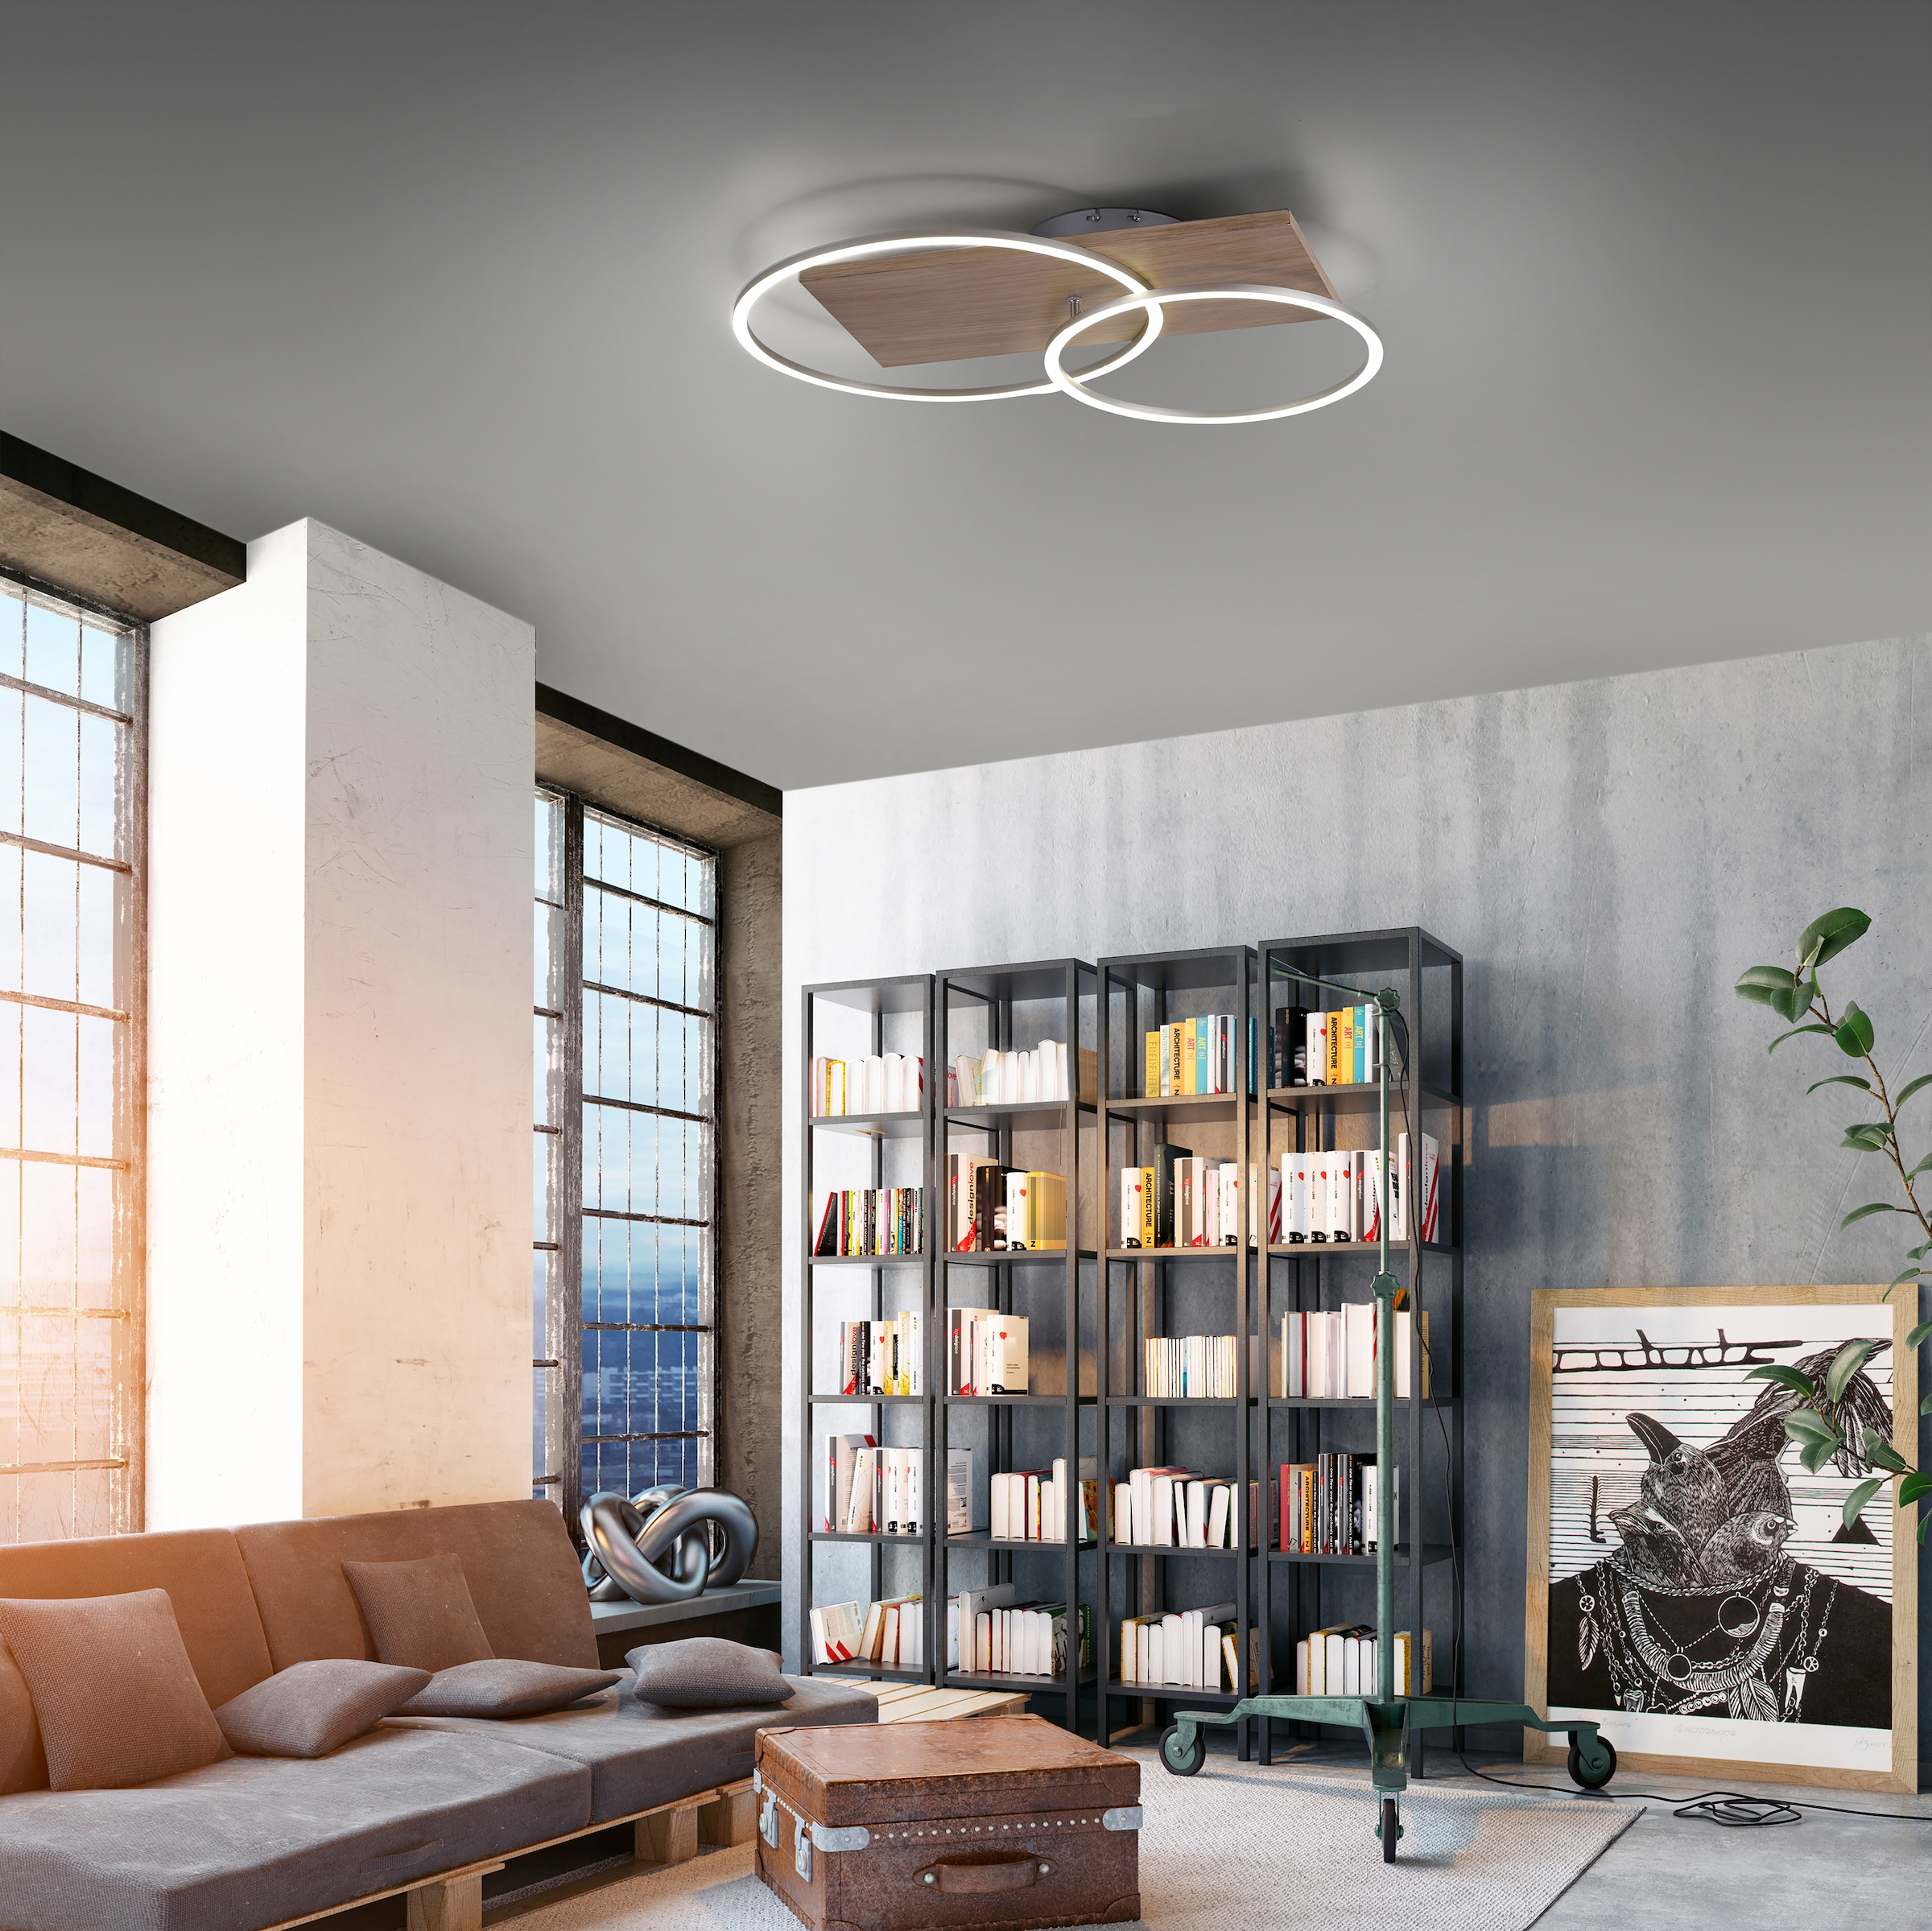 Home affaire LED Deckenleuchte »Pommerby«, 2 flammig, Leuchtmittel LED-Modul | LED fest integriert, mit Farbtemperatursteuerung, inkl. Infrarotfernbedienung, dimmbar